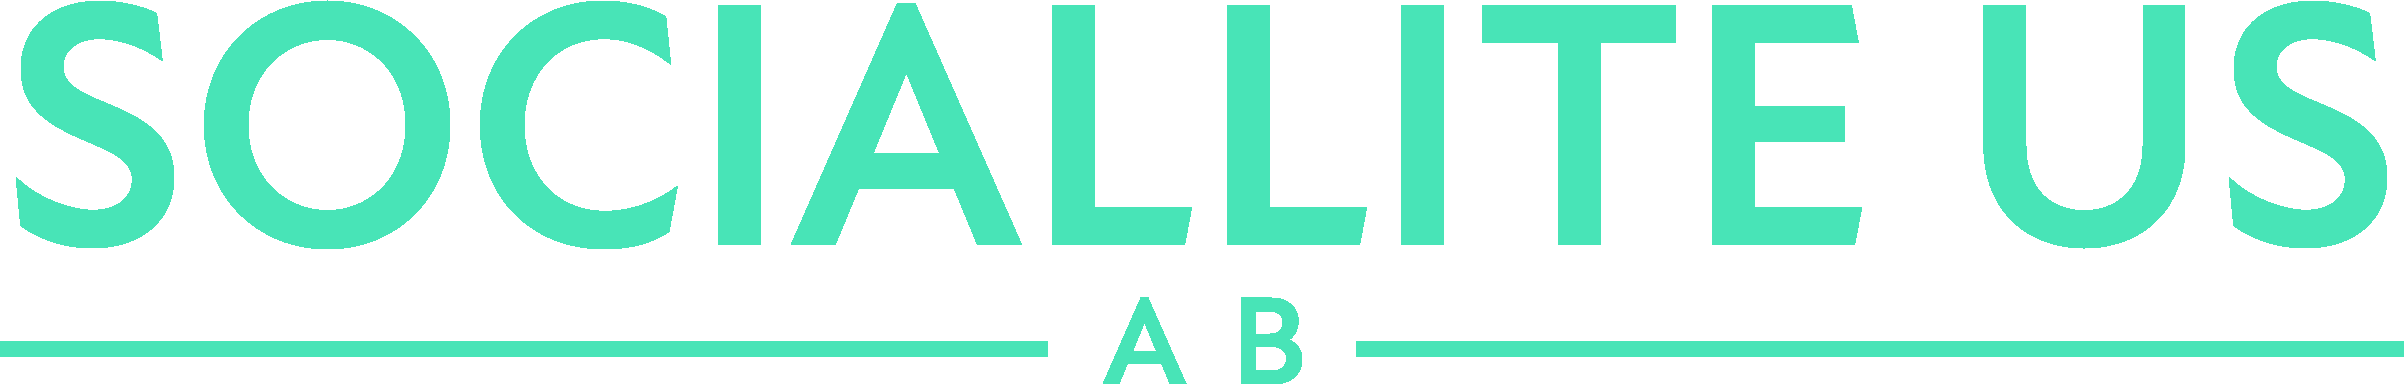 Sociallite US AB (publ) Logo